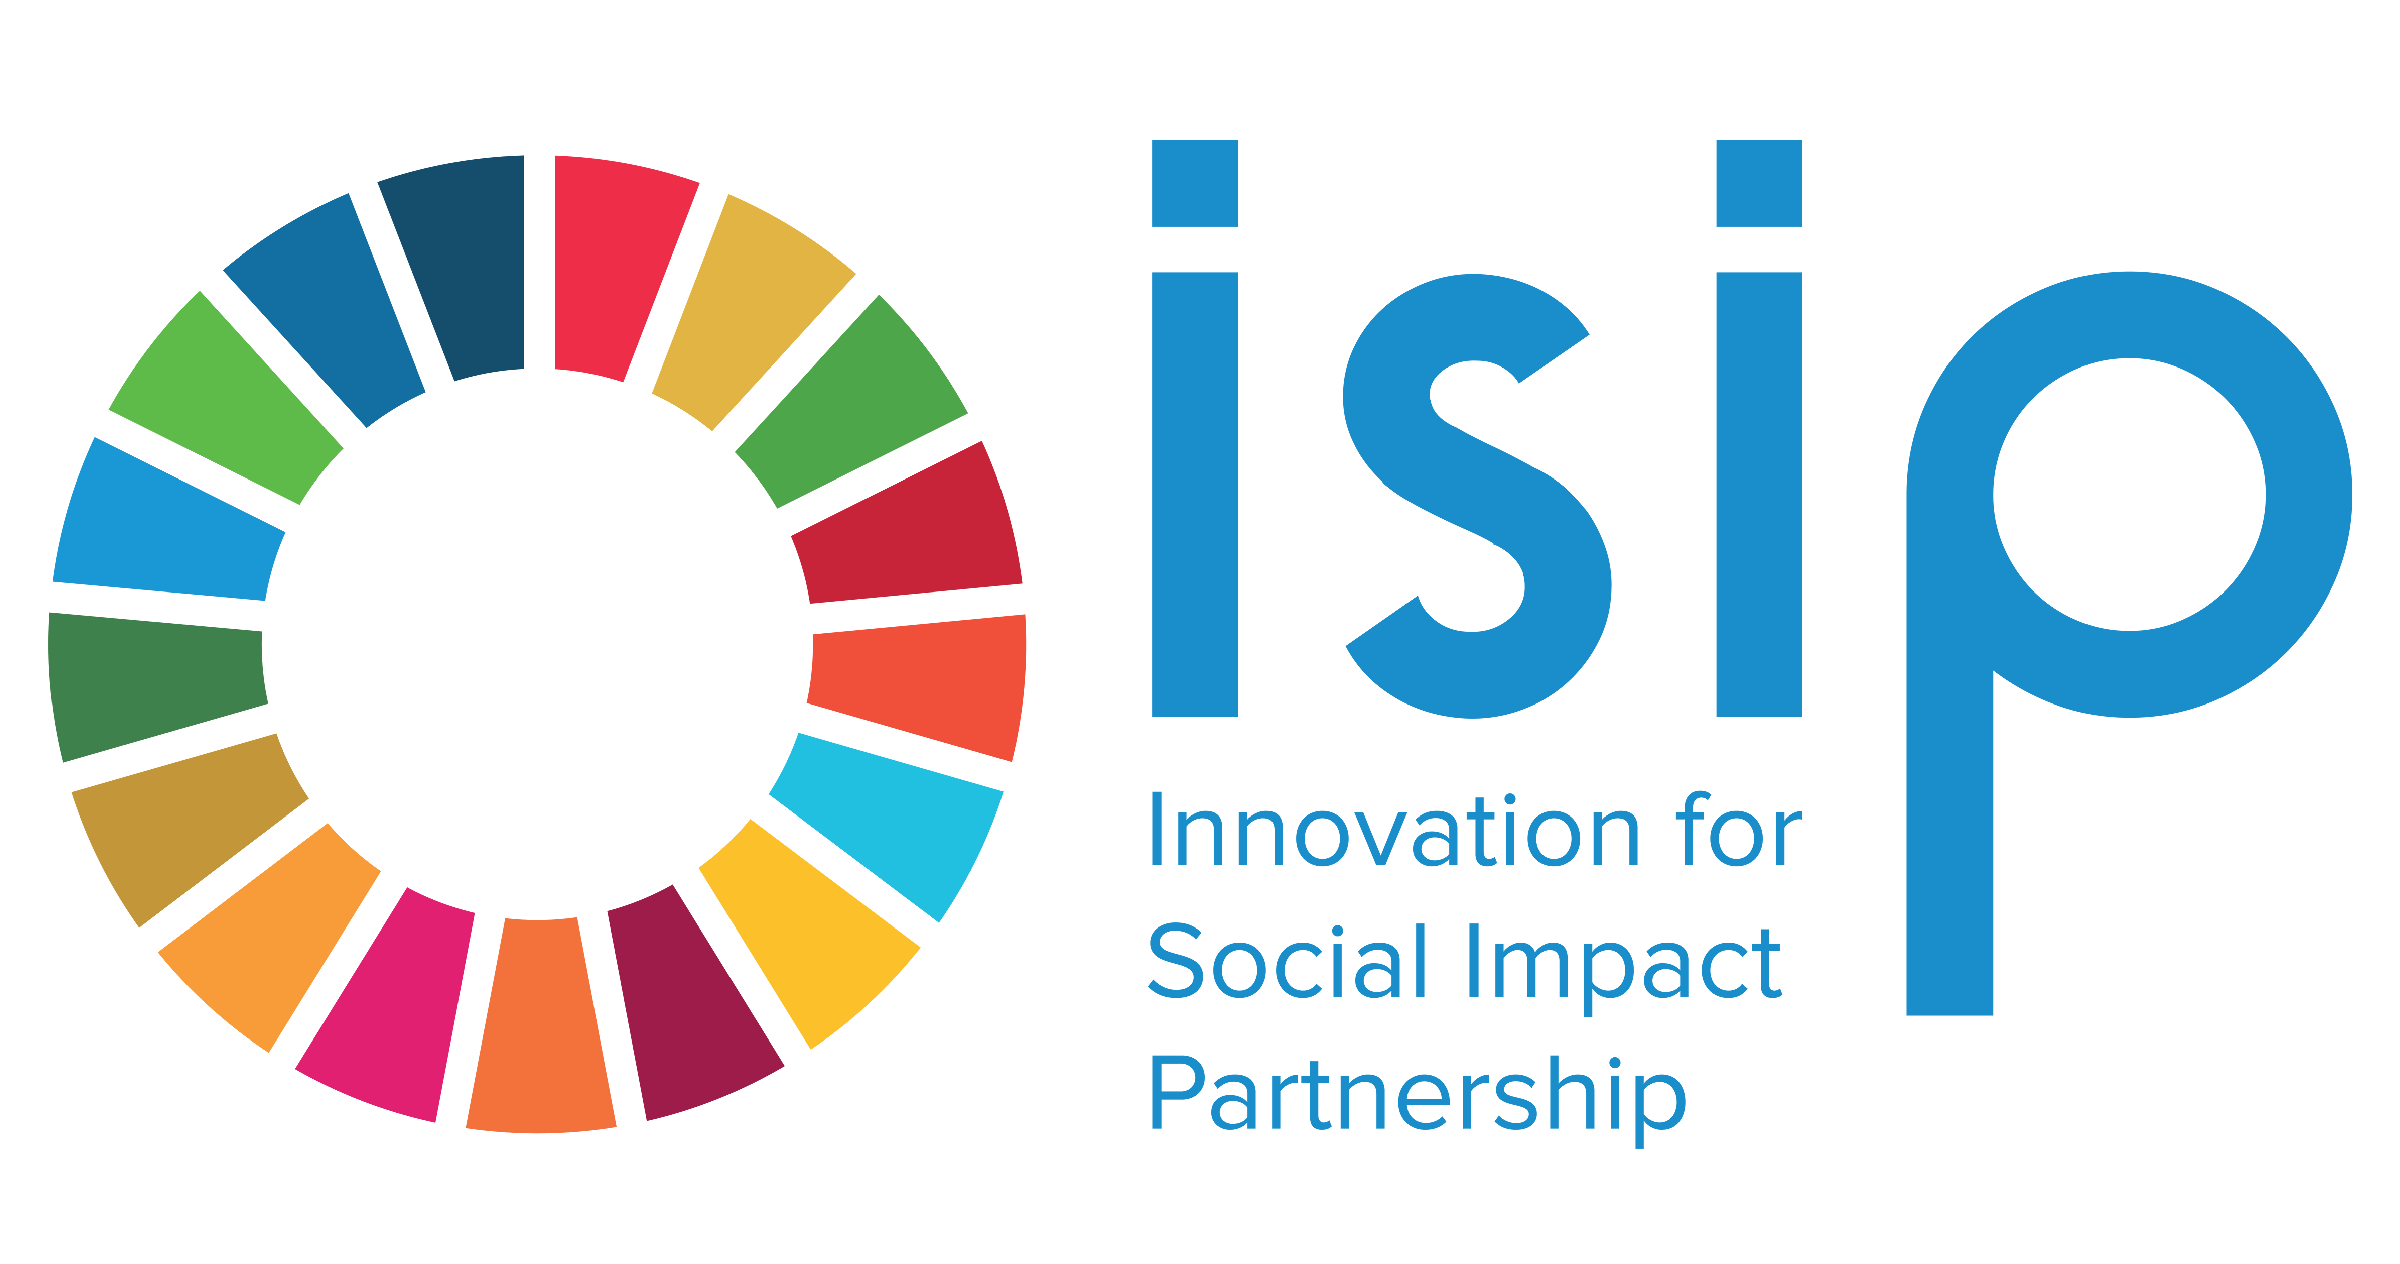 Innovation for Social Impact Partnership